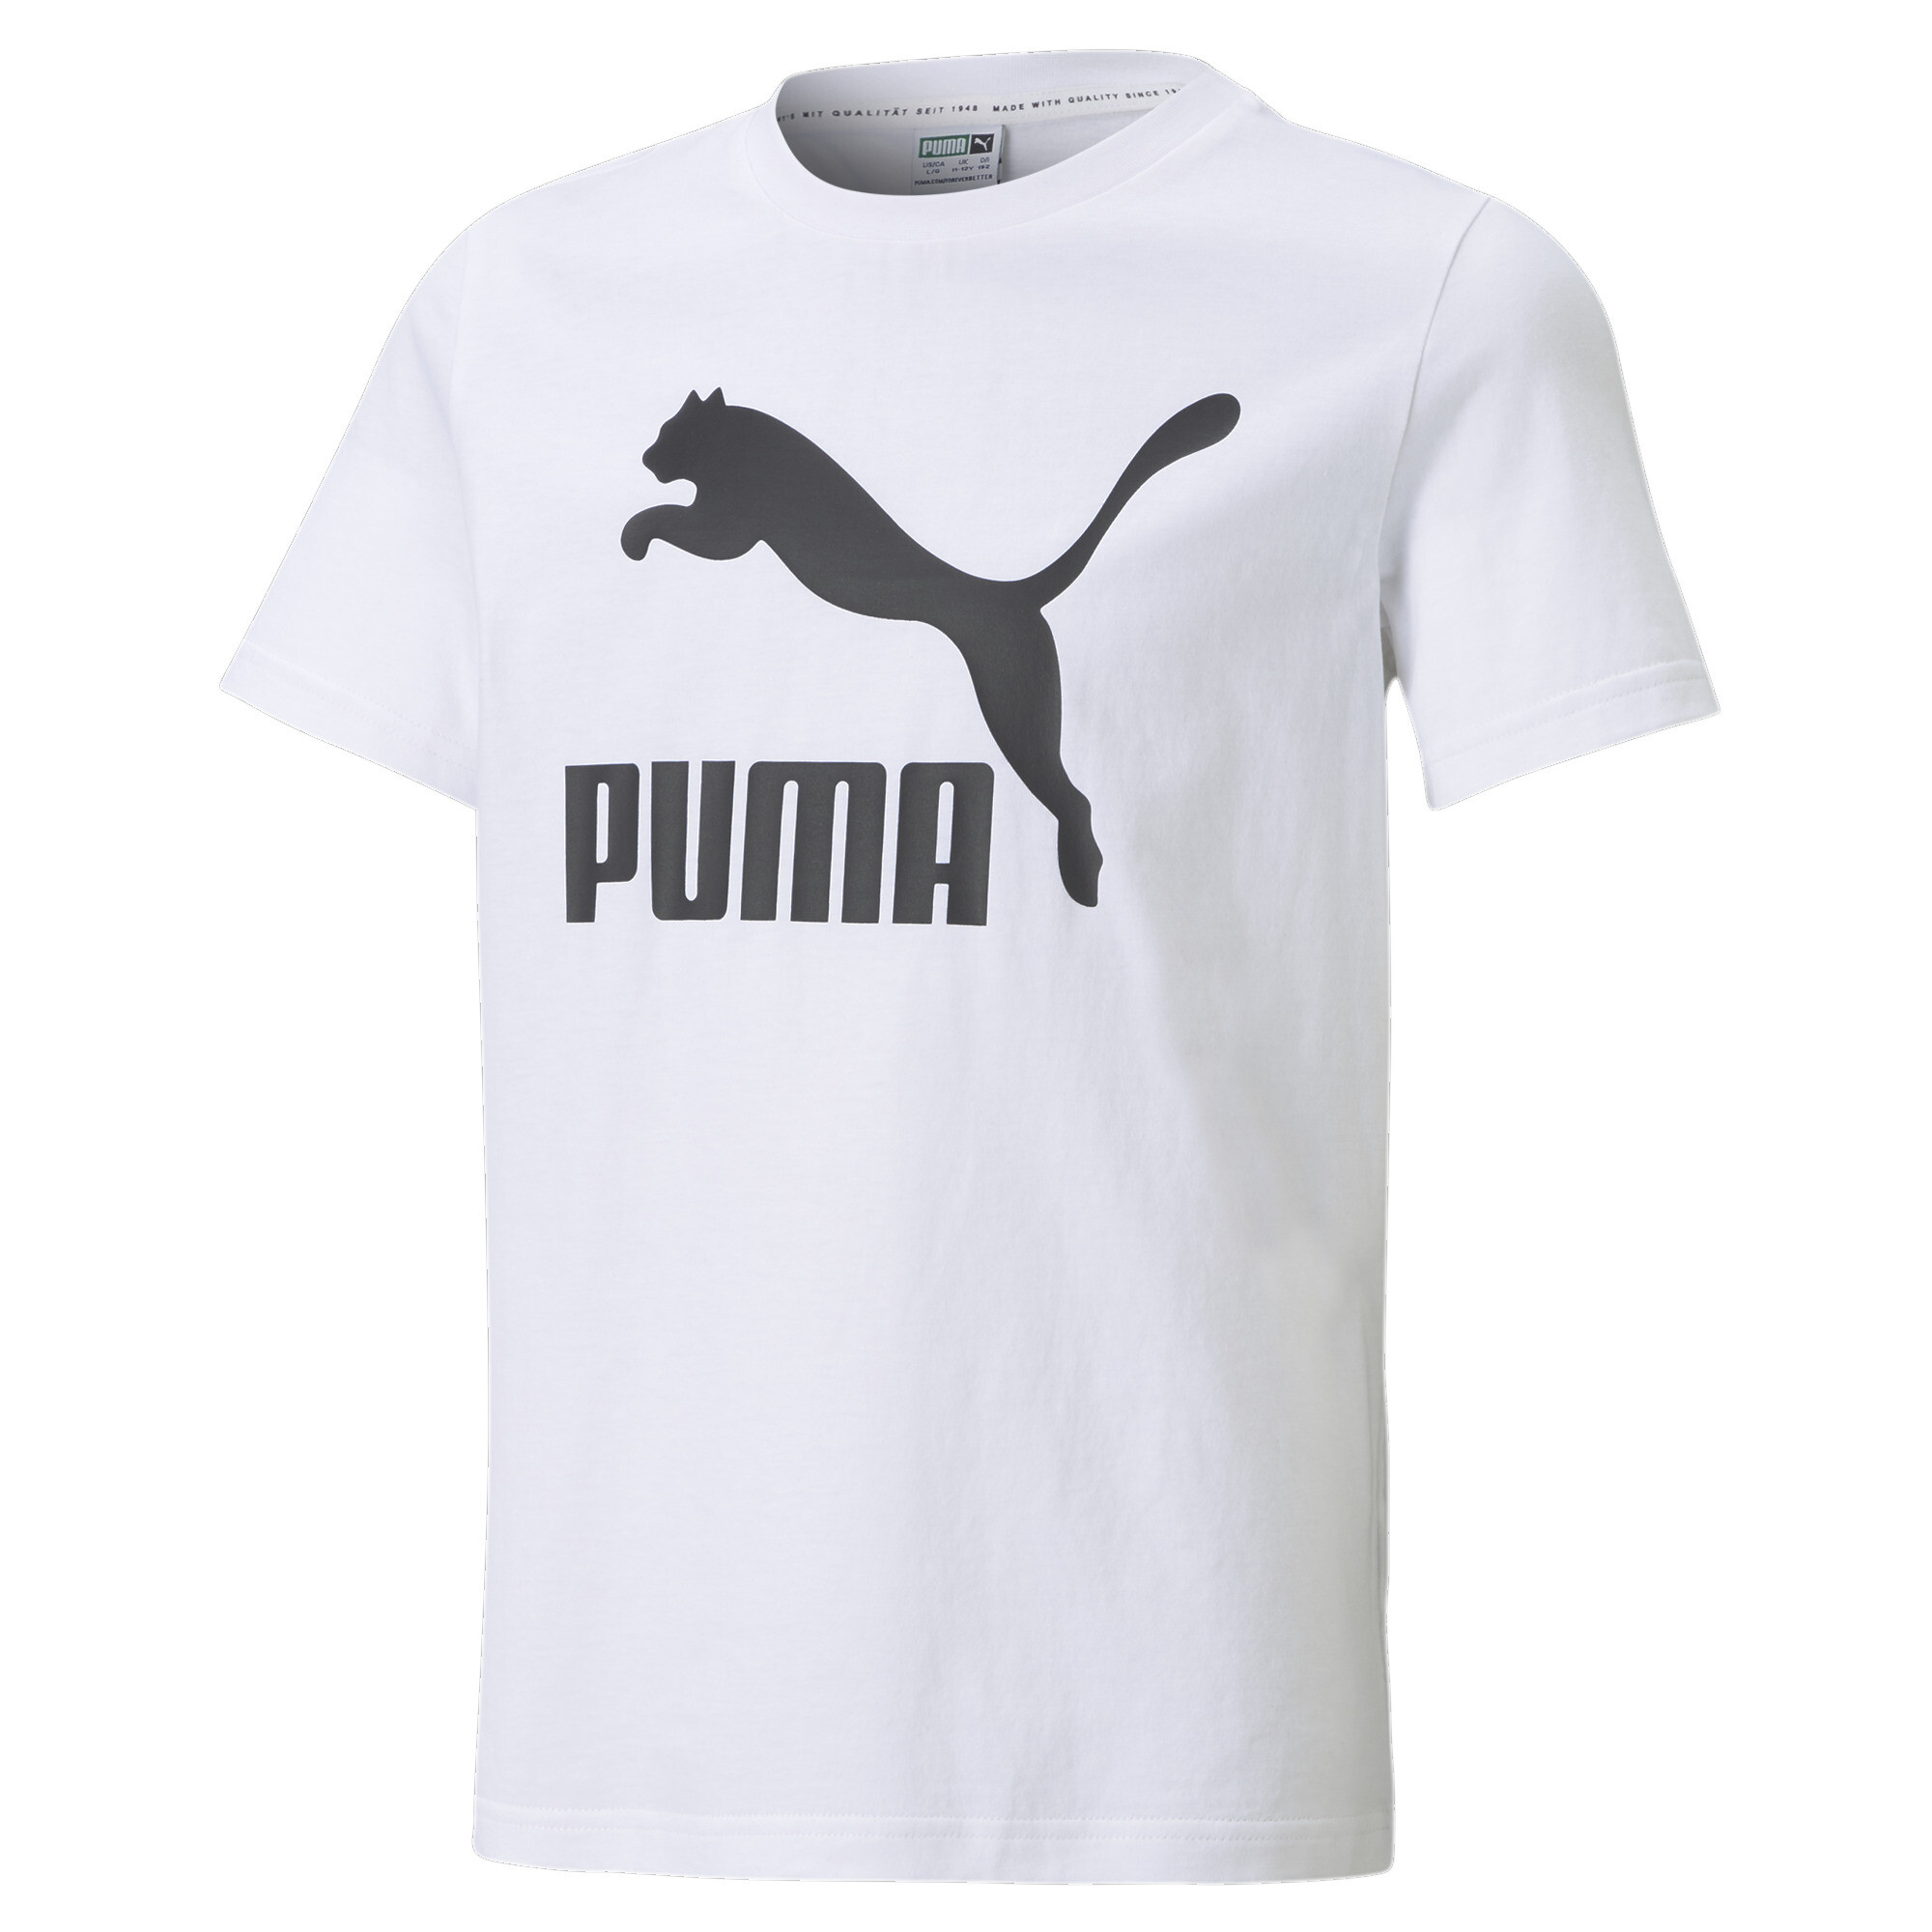 Men's Puma Classics B Youth T-Shirt, White, Size 4-5Y, Clothing